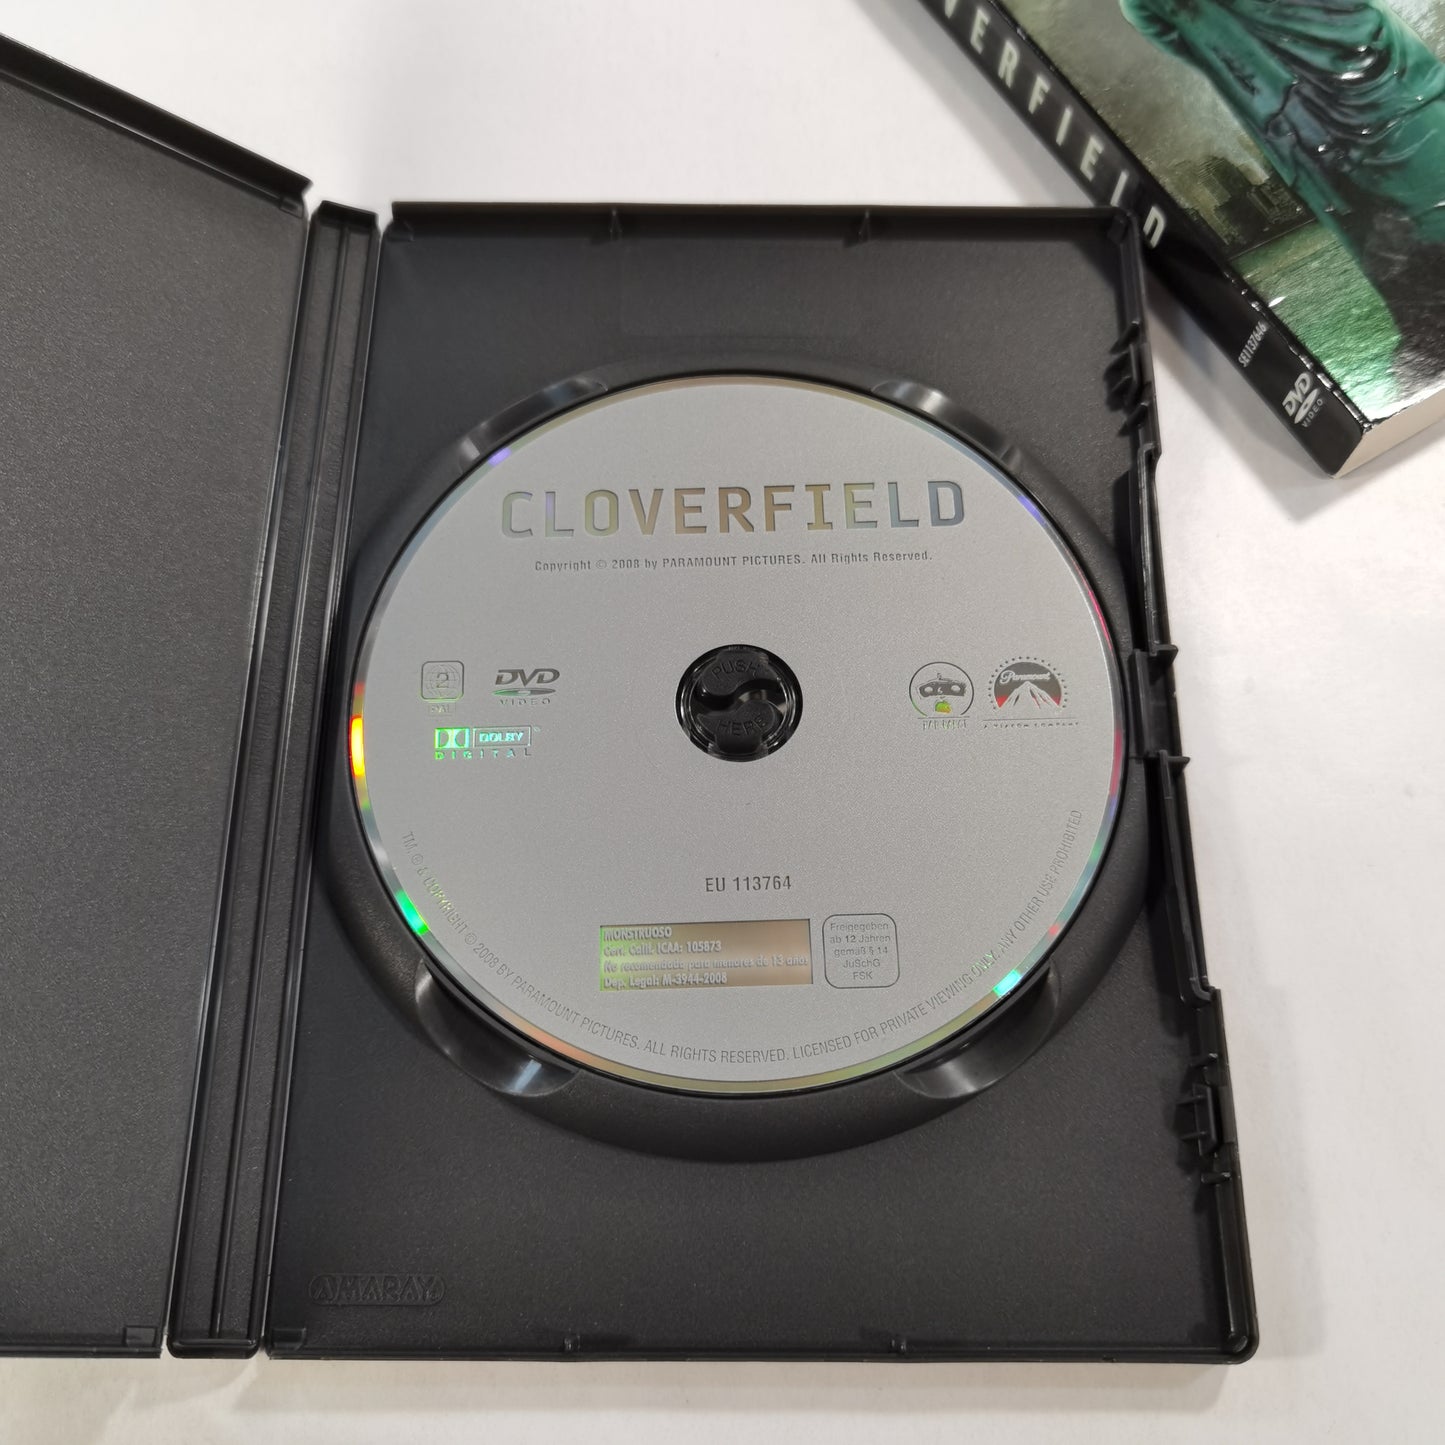 Cloverfield (2008) - DVD SE 2008